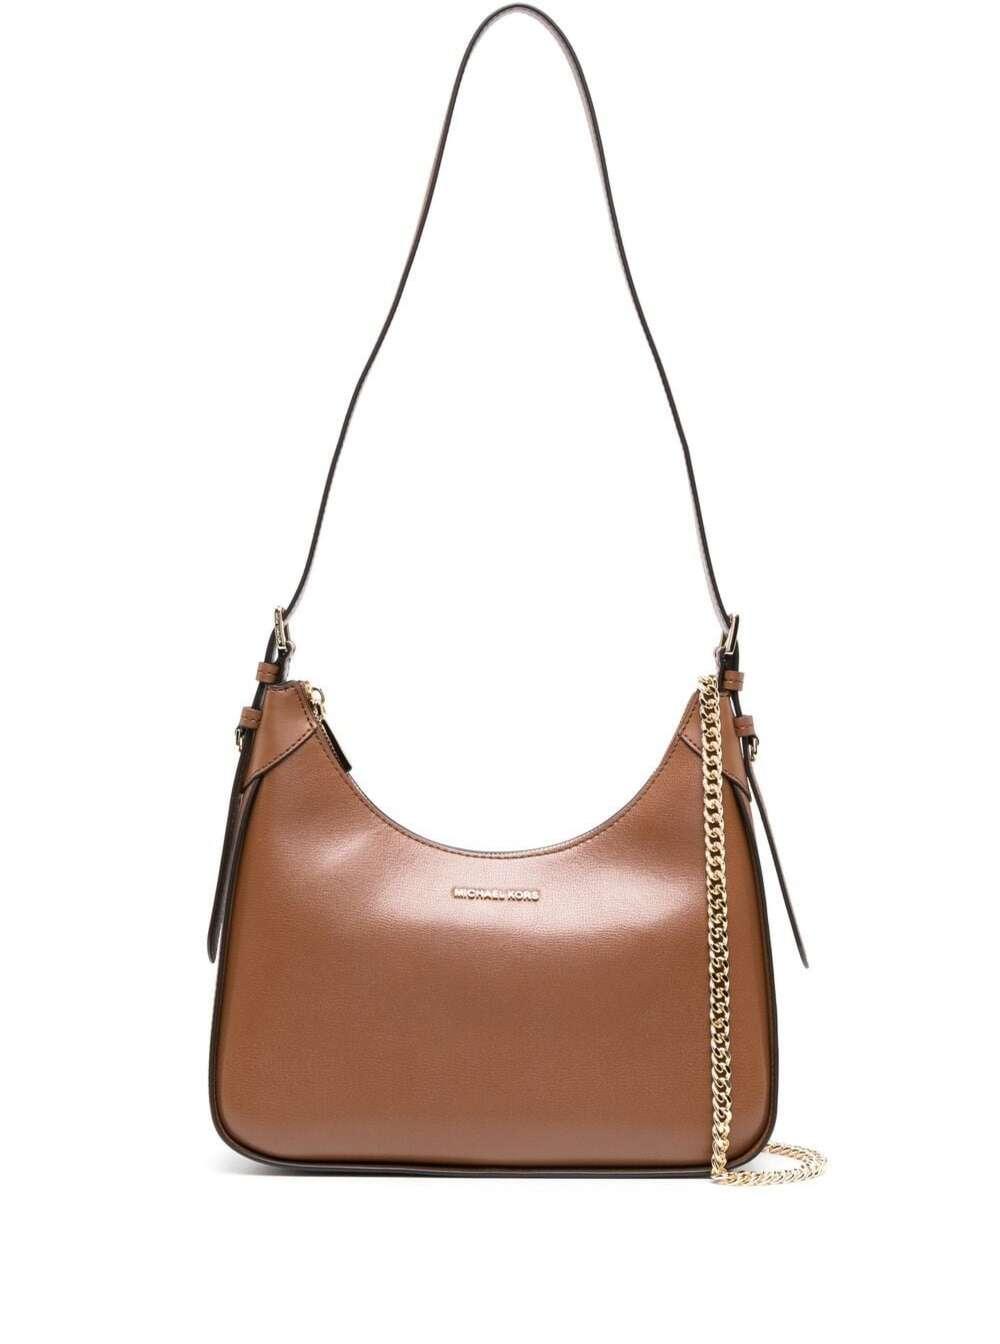 MICHAEL KORS: shoulder bag for woman - Brown